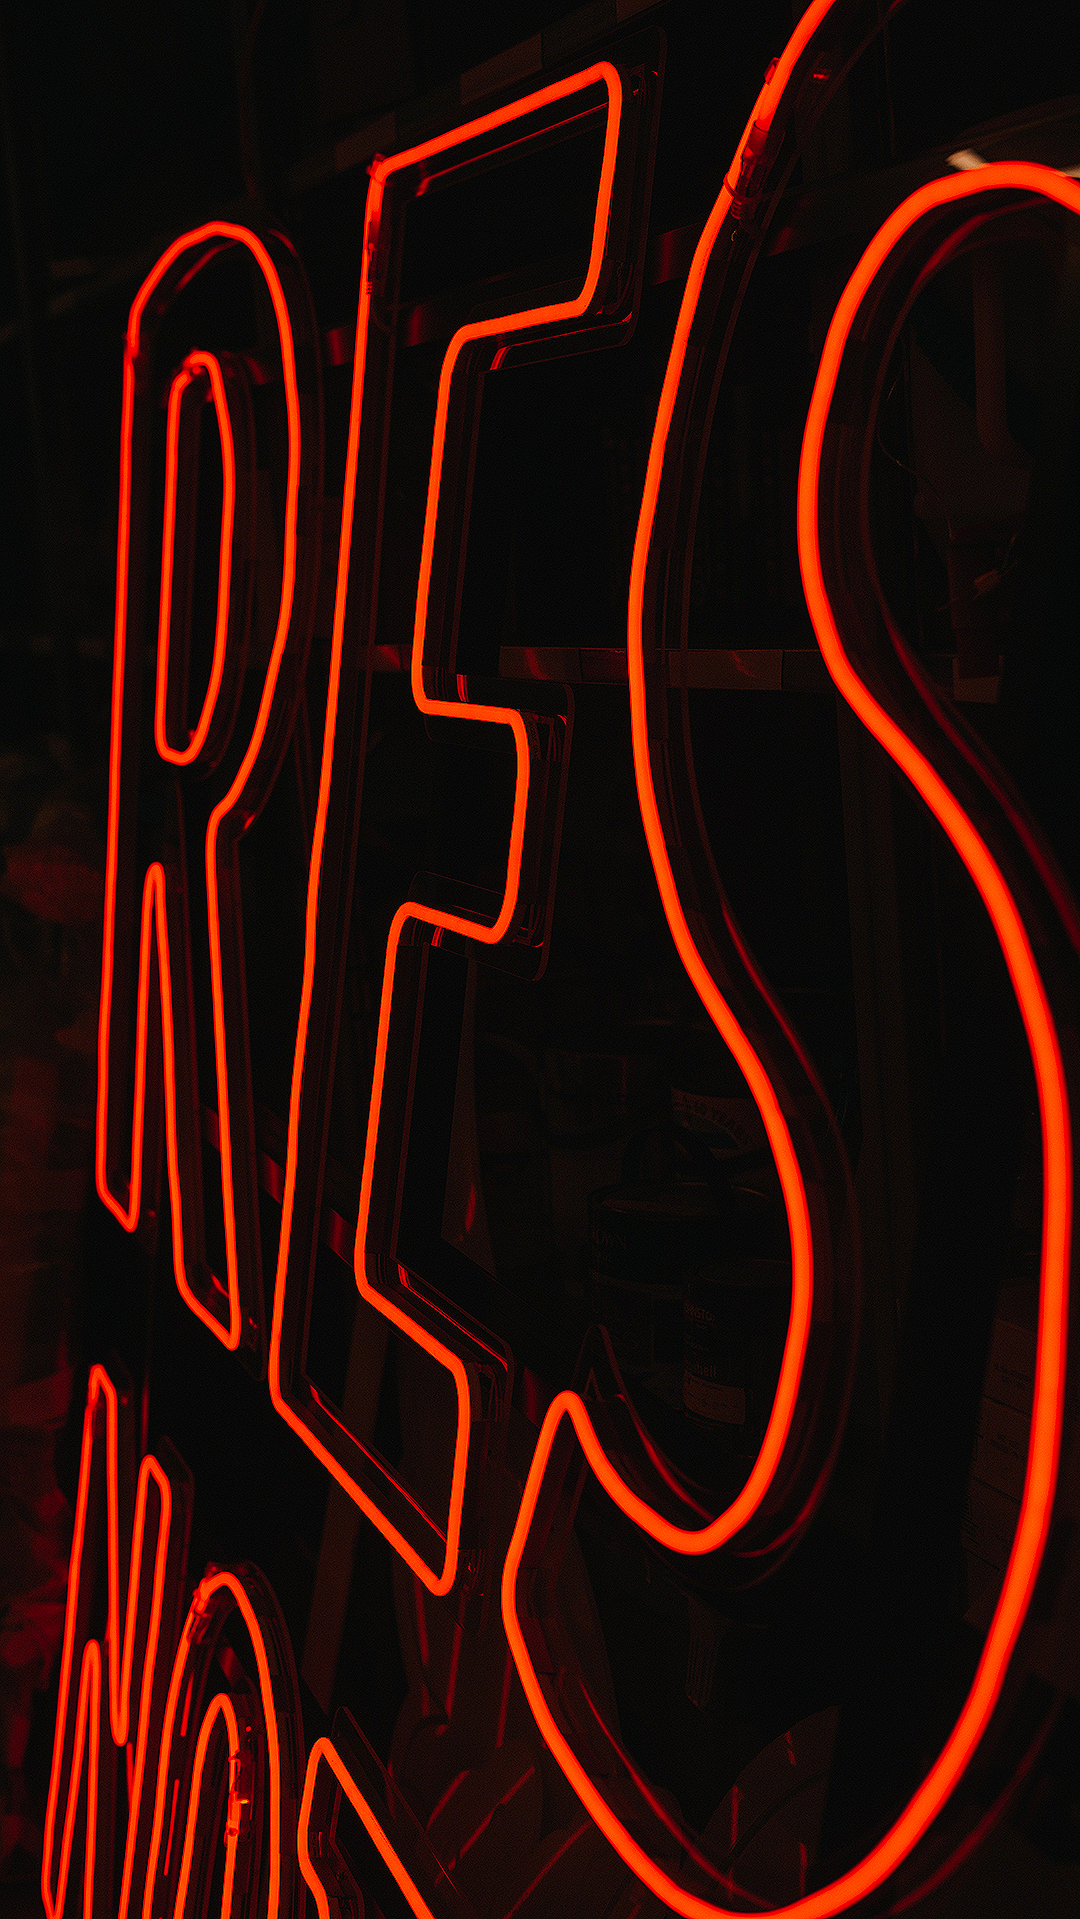 ellis-signs-custom-led-neon-sign-newcastle-gateshead-north-east